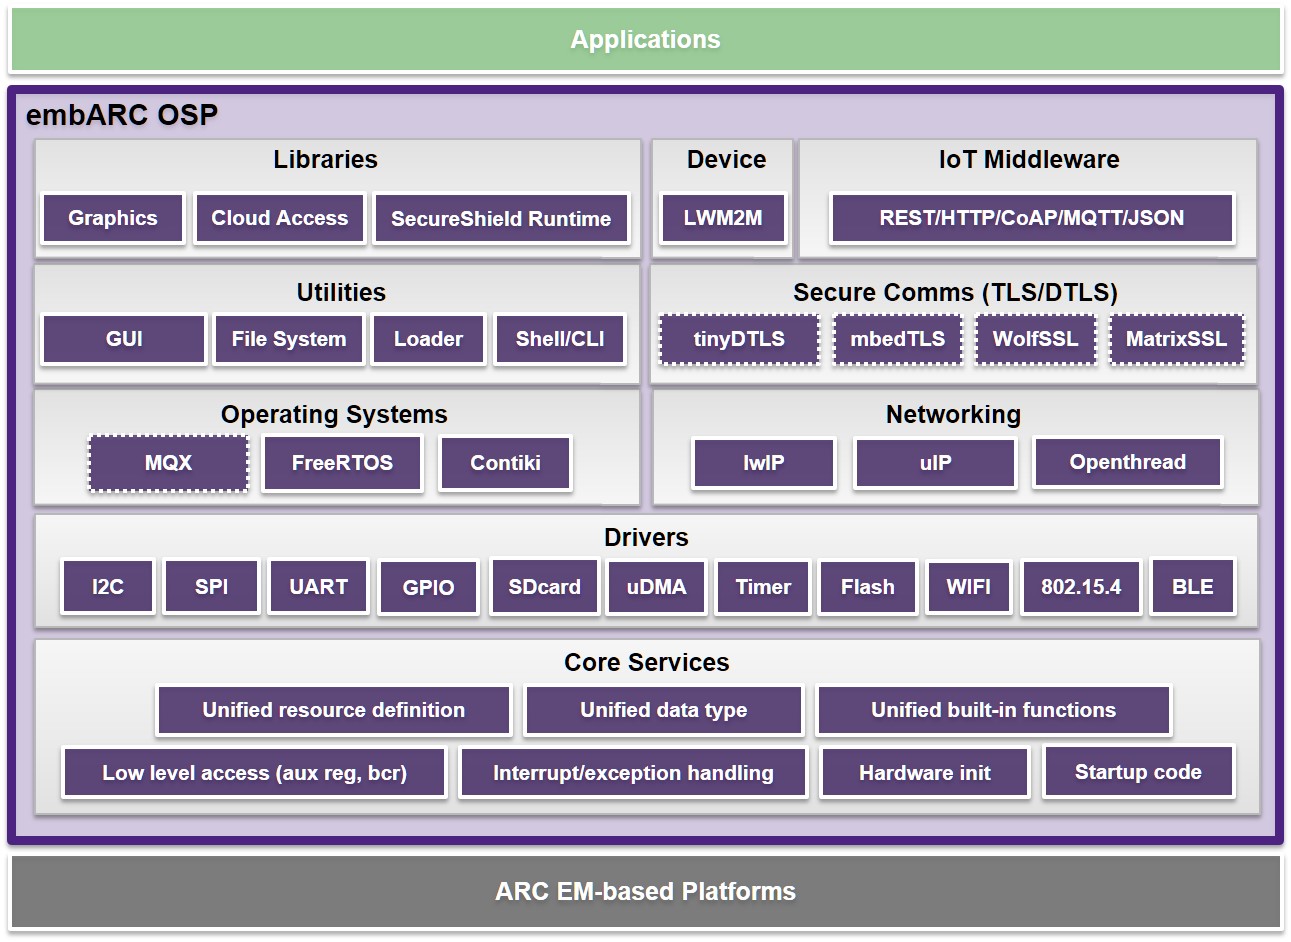 embARC Open Software Platform Architecture